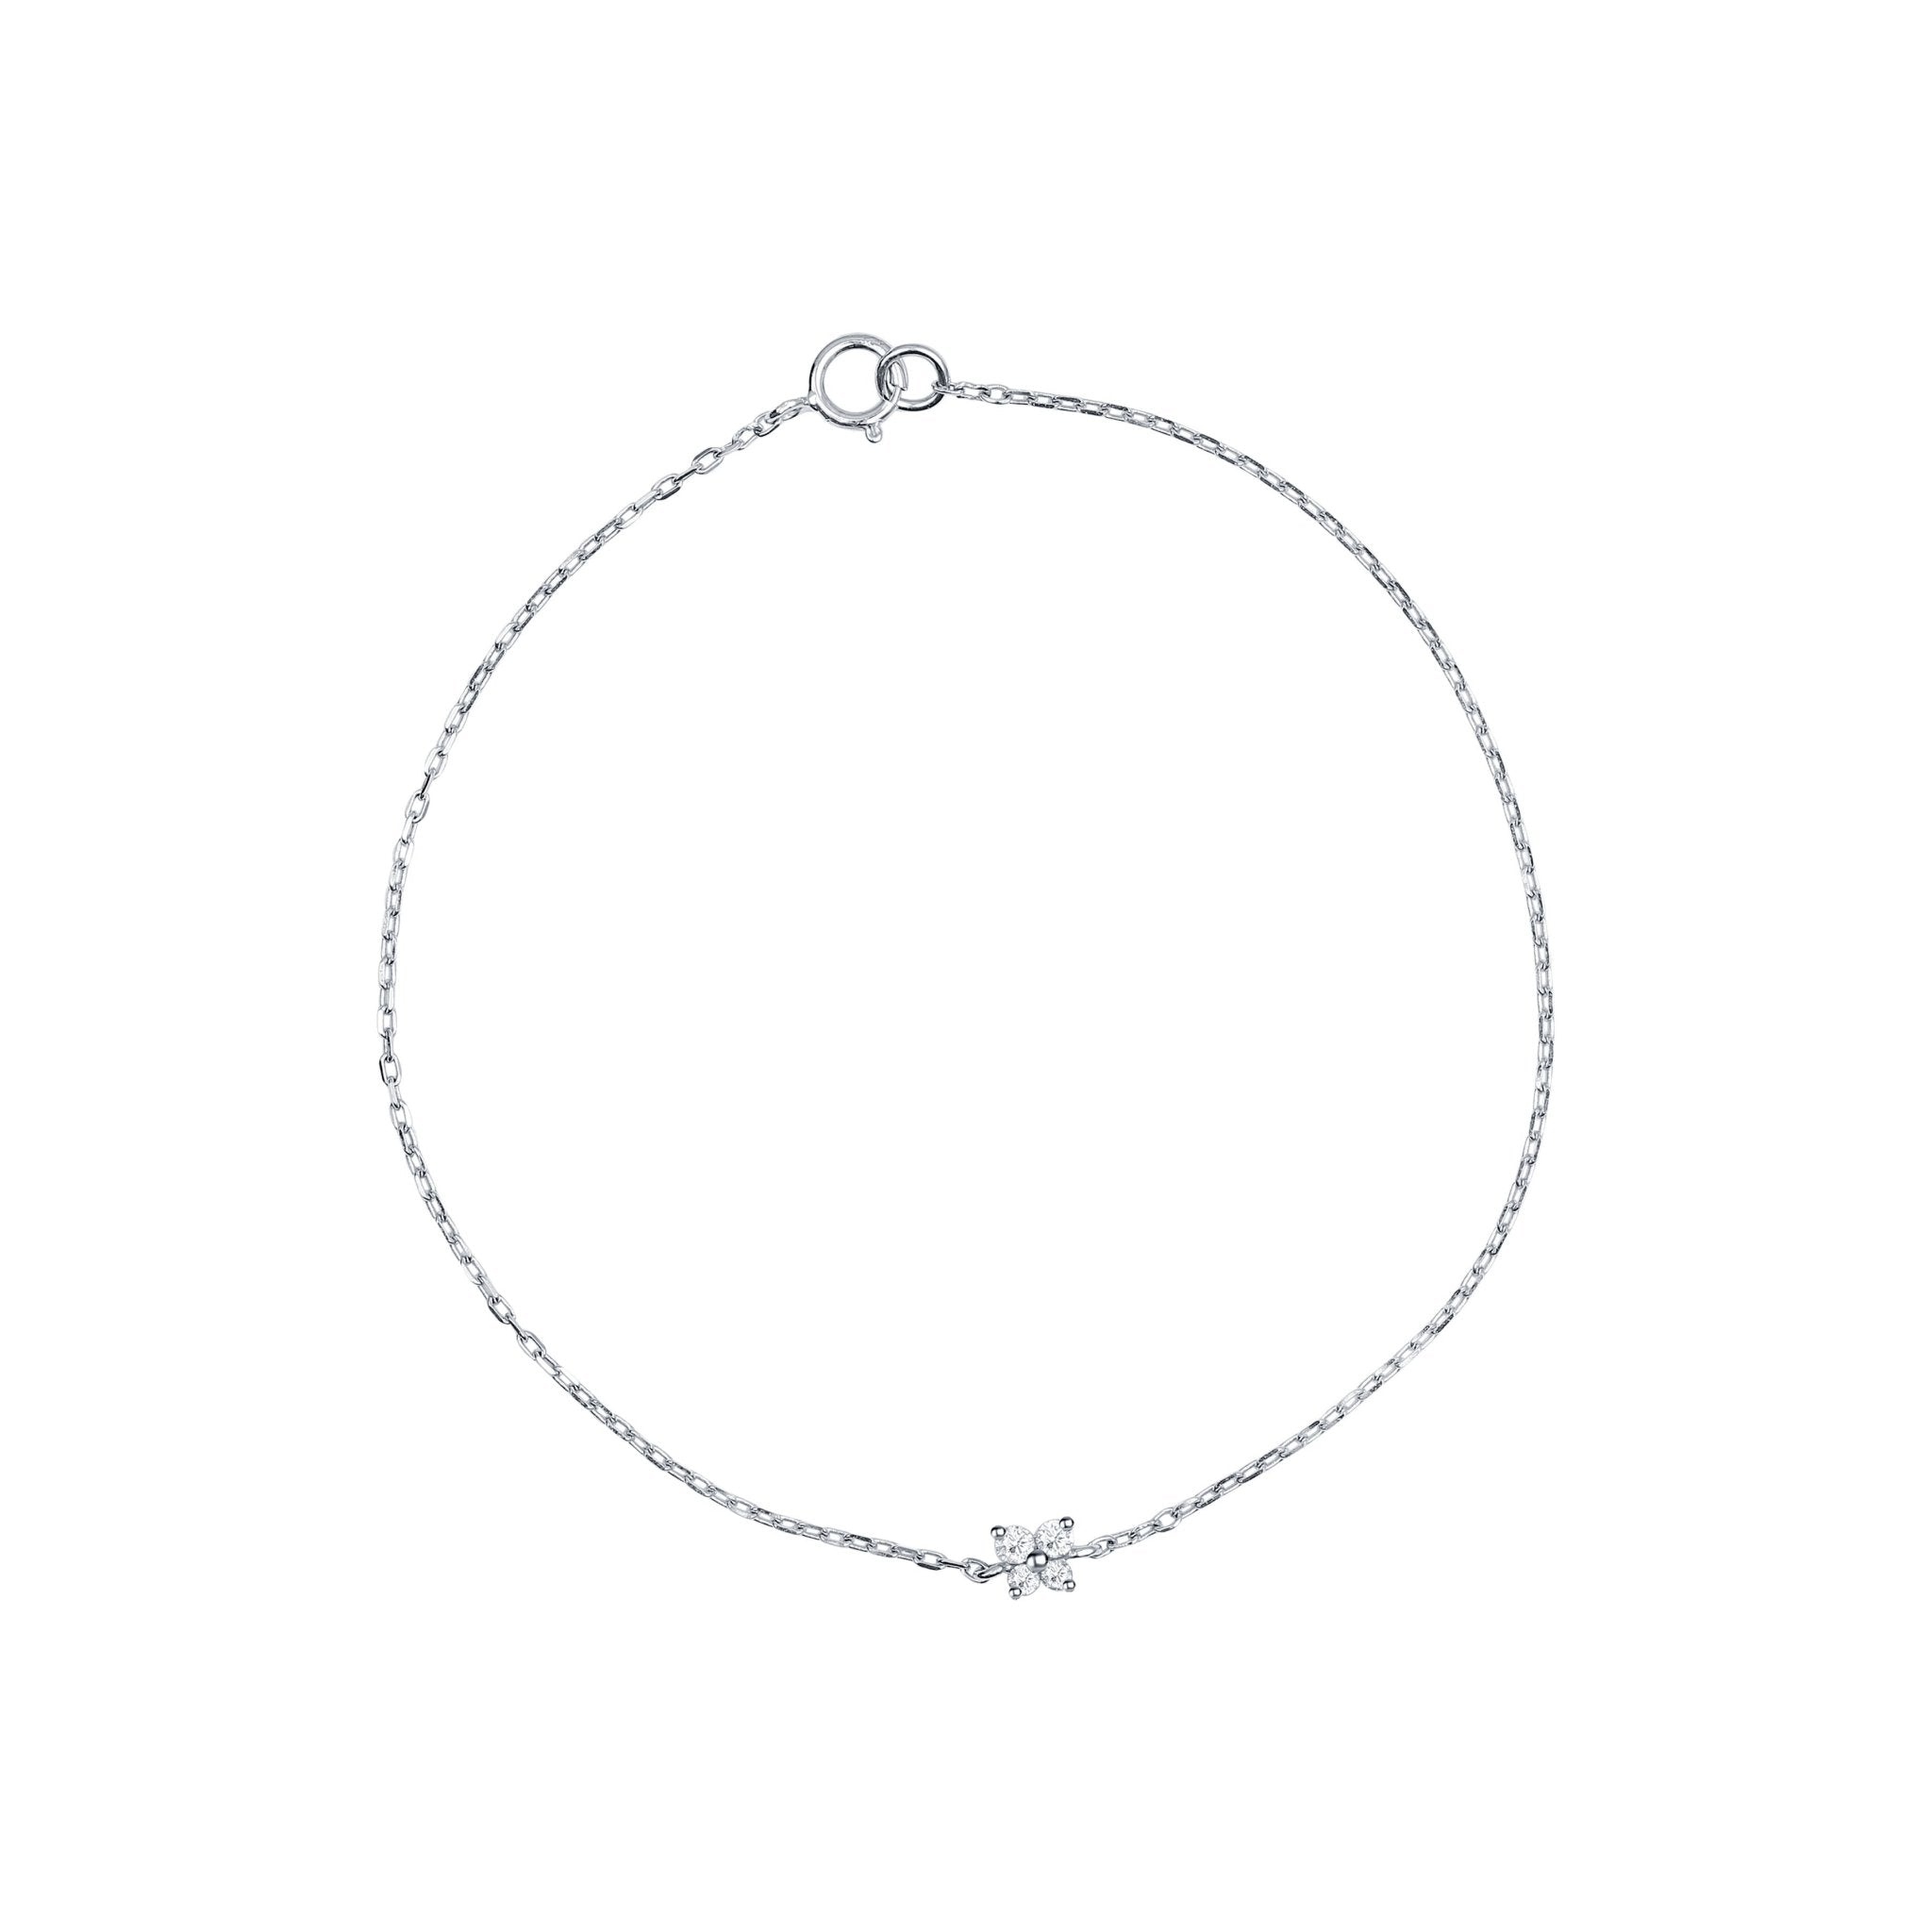 Diamond Butterfly Bracelet Bracelets Estella Collection #product_description# 17393 14k Chain Bracelets Diamond #tag4# #tag5# #tag6# #tag7# #tag8# #tag9# #tag10#